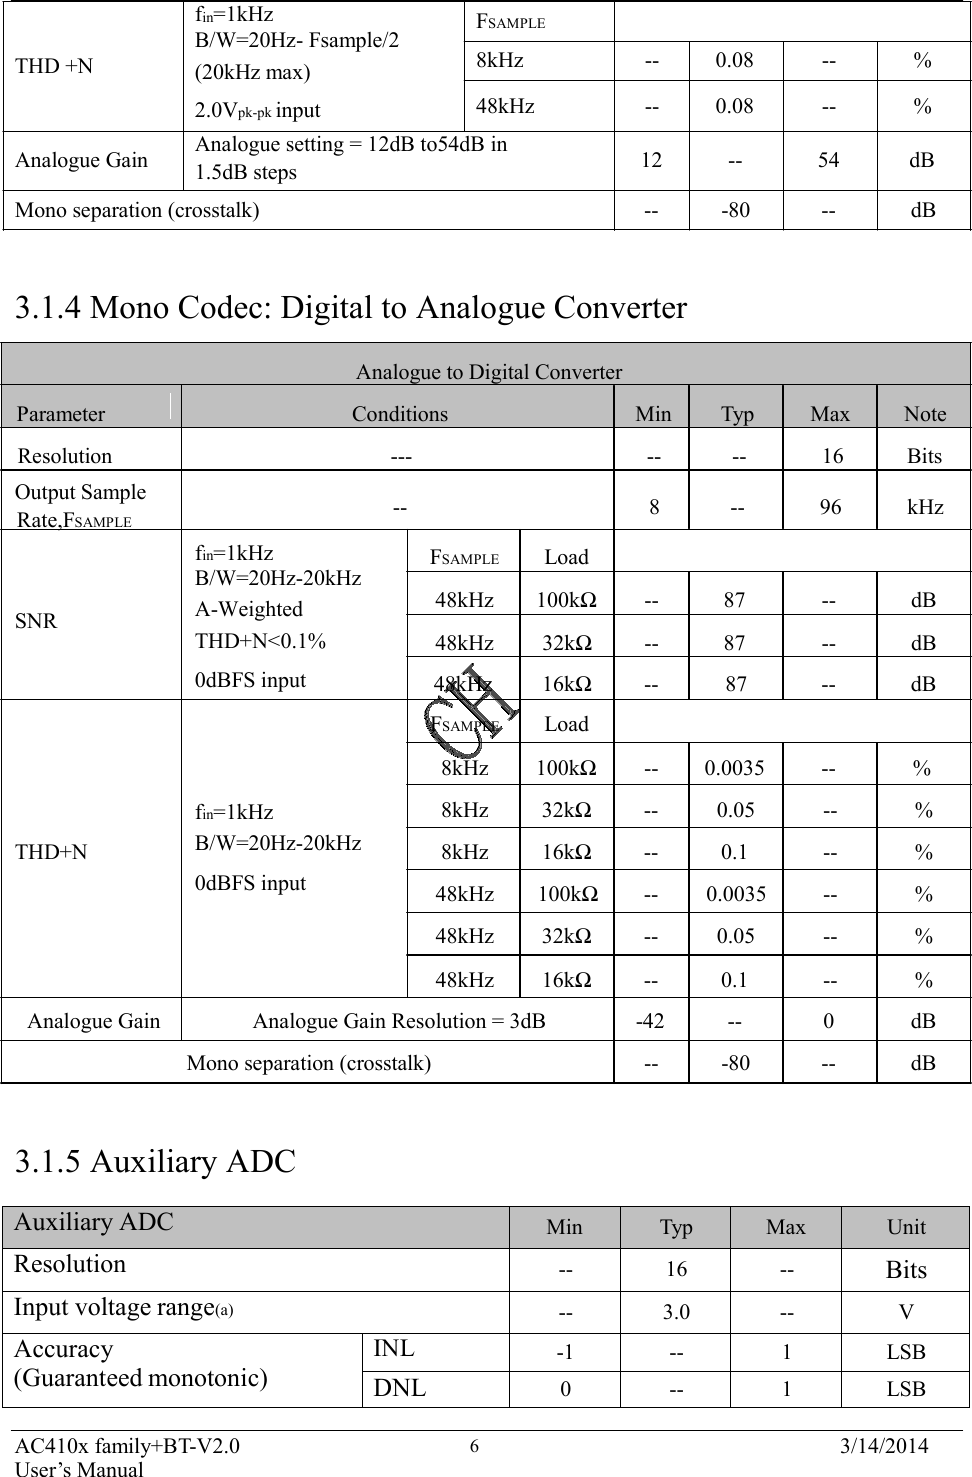 AC410x family+BT-V2.0 User’s Manual 3/14/2014 6                                                        THD +N fin=1kHz B/W=20Hz- Fsample/2 (20kHz max) FSAMPLE  8kHz  --  0.08  --  %    Analogue Gain 2.0Vpk-pk input  48kHz  --  0.08  --  % Analogue setting = 12dB to54dB in 1.5dB steps  12  --  54  dB  Mono separation (crosstalk)  --  -80  --  dB    3.1.4 Mono Codec: Digital to Analogue Converter   Analogue to Digital Converter  Parameter  Conditions  Min  Typ  Max  Note  Resolution  ---  --  --  16  Bits Output Sample Rate,FSAMPLE  --  8  --  96  kHz     SNR fin=1kHz B/W=20Hz-20kHz A-Weighted THD+N&lt;0.1%  FSAMPLE  Load  48kHz  100kΩ  --  87  --  dB  48kHz  32kΩ  --  87  --  dB  0dBFS input   48kHz  16kΩ  --  87  --  dB FSAMPLE  Load 8kHz  100kΩ  --  0.0035  --  %    THD+N  fin=1kHz B/W=20Hz-20kHz  0dBFS input  8kHz  32kΩ  --  0.05  --  %  8kHz  16kΩ  --  0.1  --  %  48kHz  100kΩ  --  0.0035  --  %  48kHz  32kΩ  --  0.05  --  %  48kHz  16kΩ  --  0.1  --  % Analogue Gain    Analogue Gain Resolution = 3dB  -42  --  0  dB Mono separation (crosstalk)    --  -80  --  dB    3.1.5 Auxiliary ADC  Auxiliary ADC Min Typ Max Unit Resolution -- 16 -- Bits Input voltage range(a) -- 3.0 -- V Accuracy (Guaranteed monotonic) INL  -1 -- 1 LSB DNL 0 -- 1 LSB 